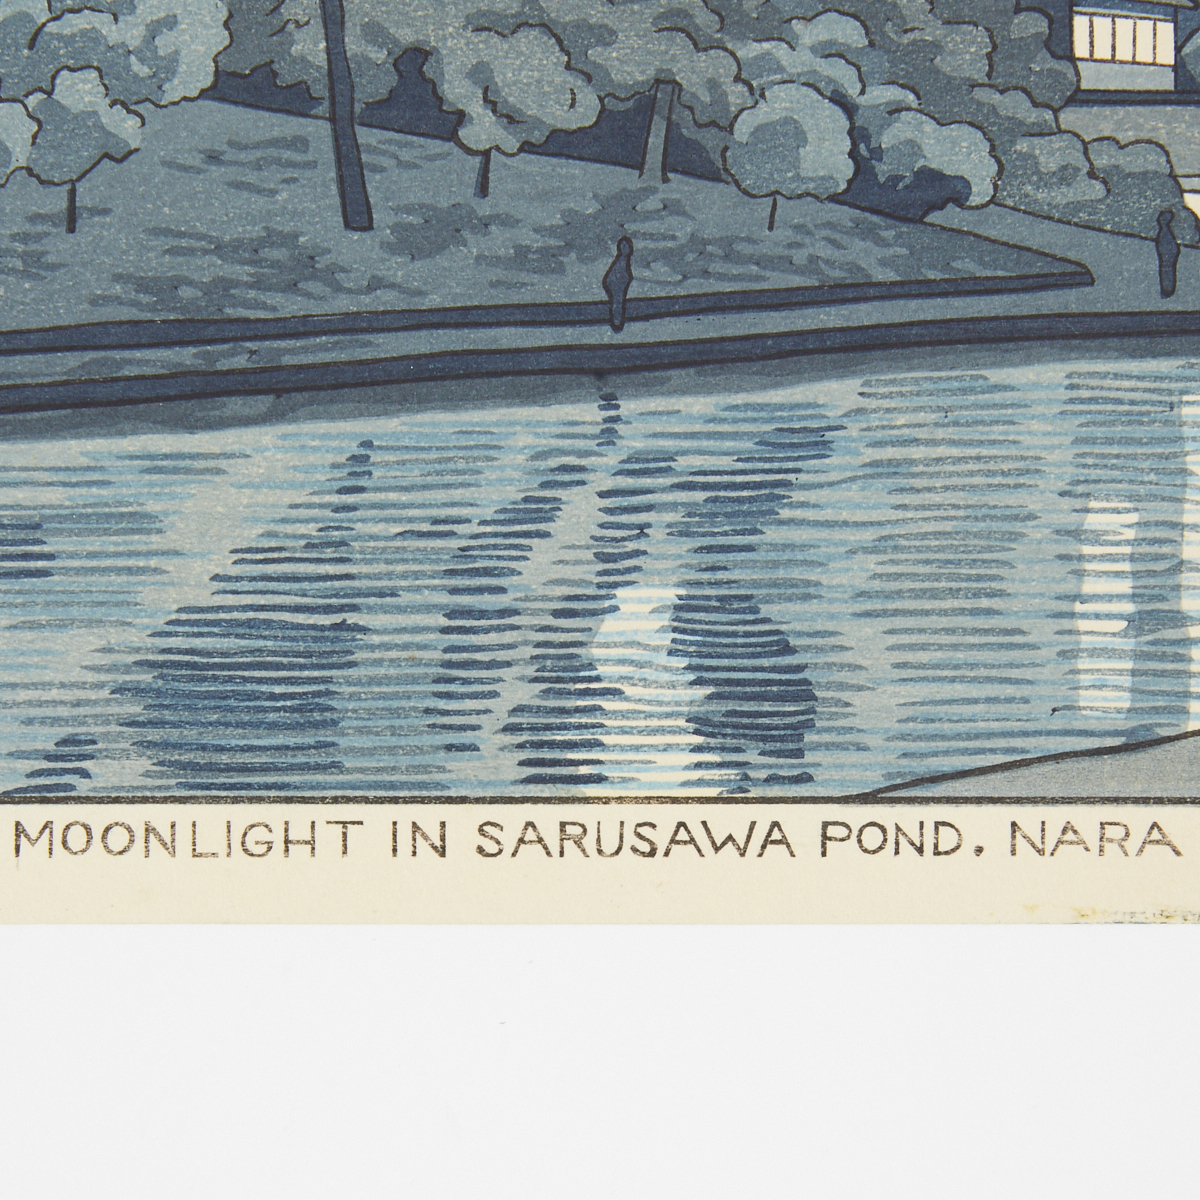 Asano Takeji "Moonlight in Sarasawa Pond Nara" Japanese Woodblock Print - Image 4 of 6